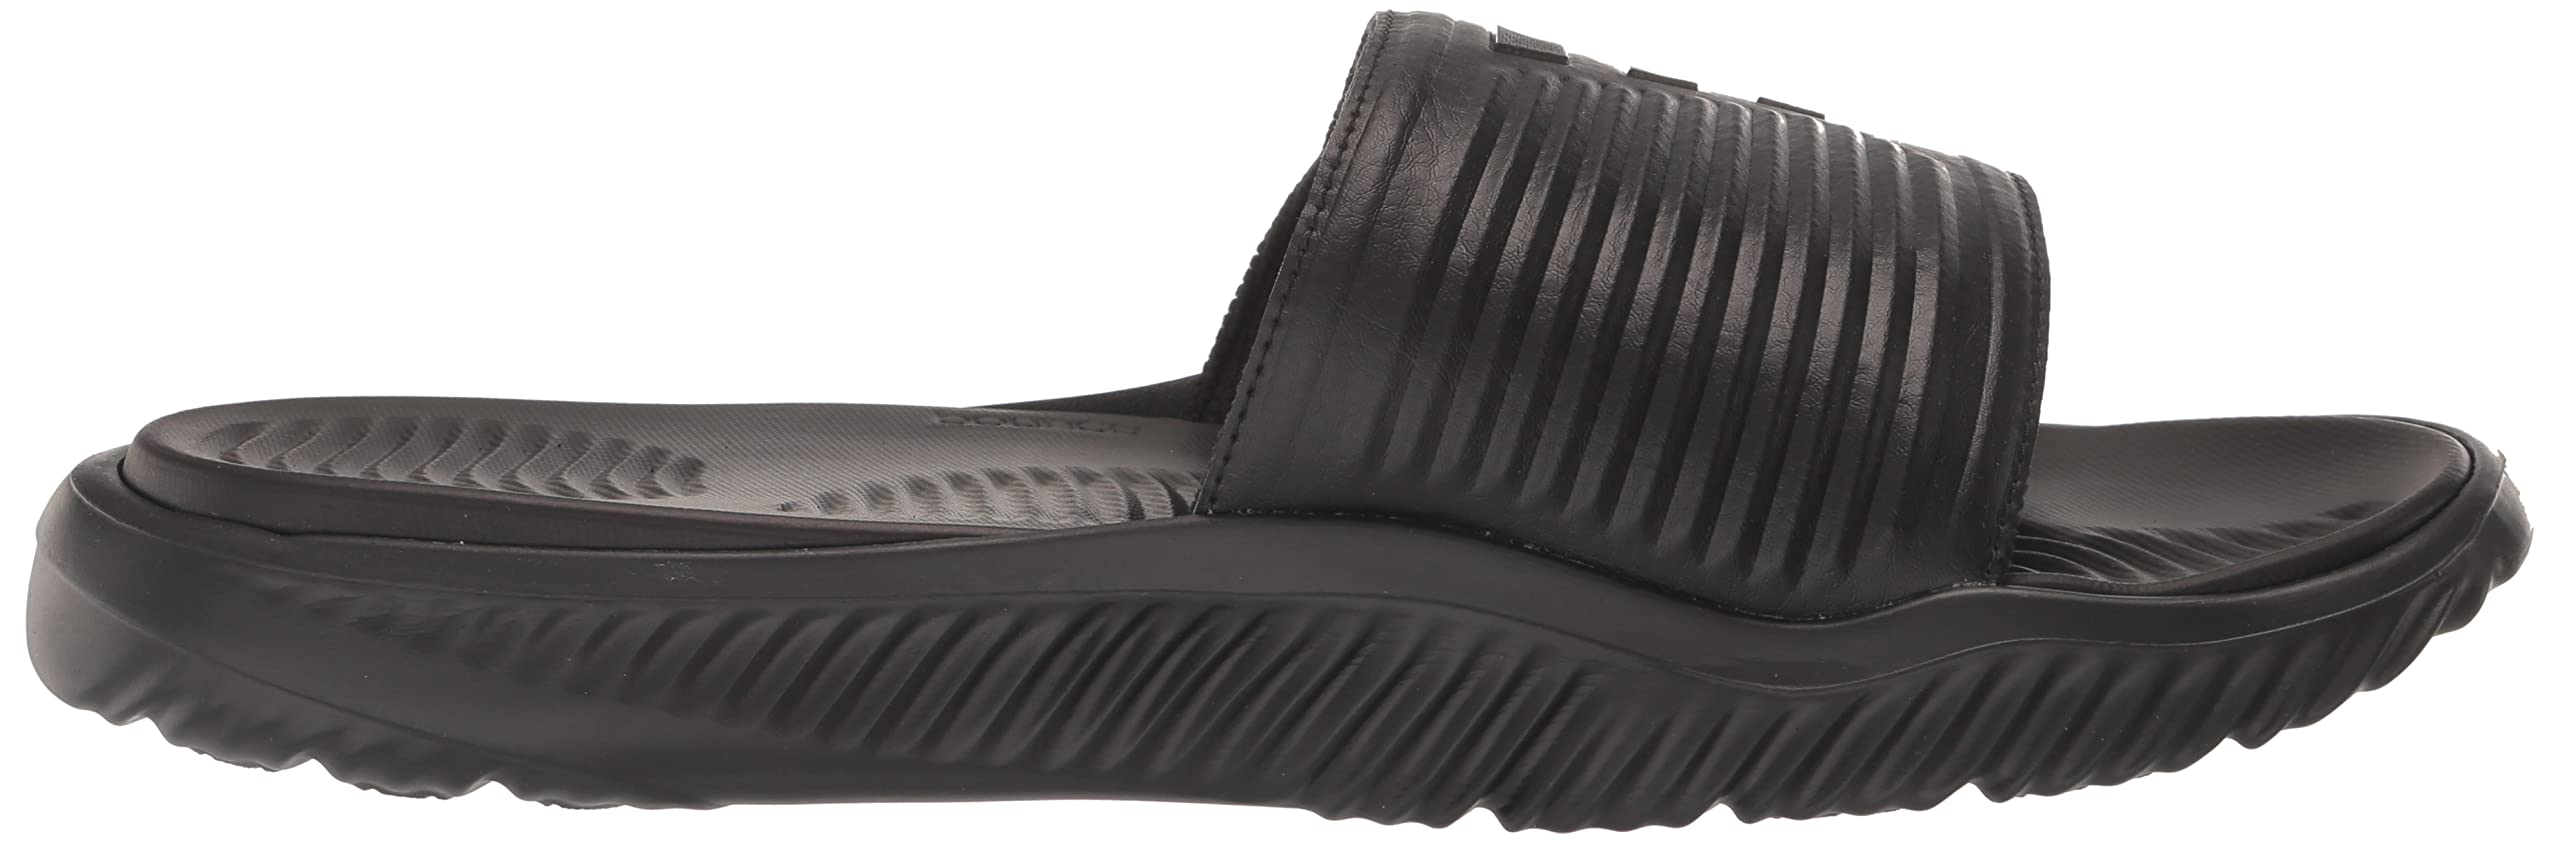 adidas Unisex-Adult Alphabounce 2.0 Slides Sandal